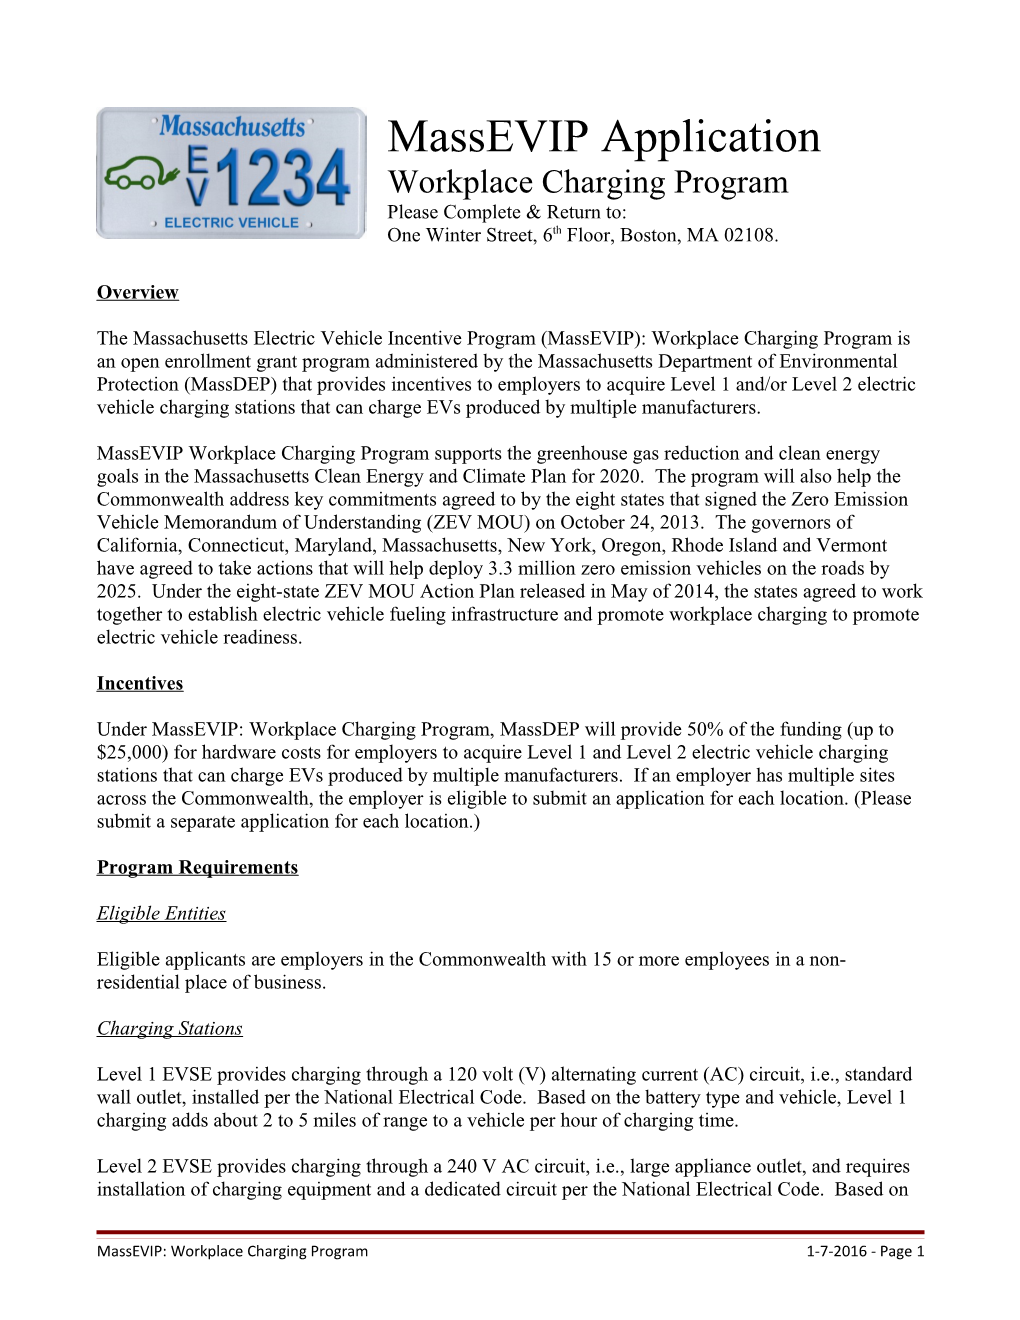 The Massachusetts Electric Vehicle Incentive Program (Massevip):Workplace Charging Programis